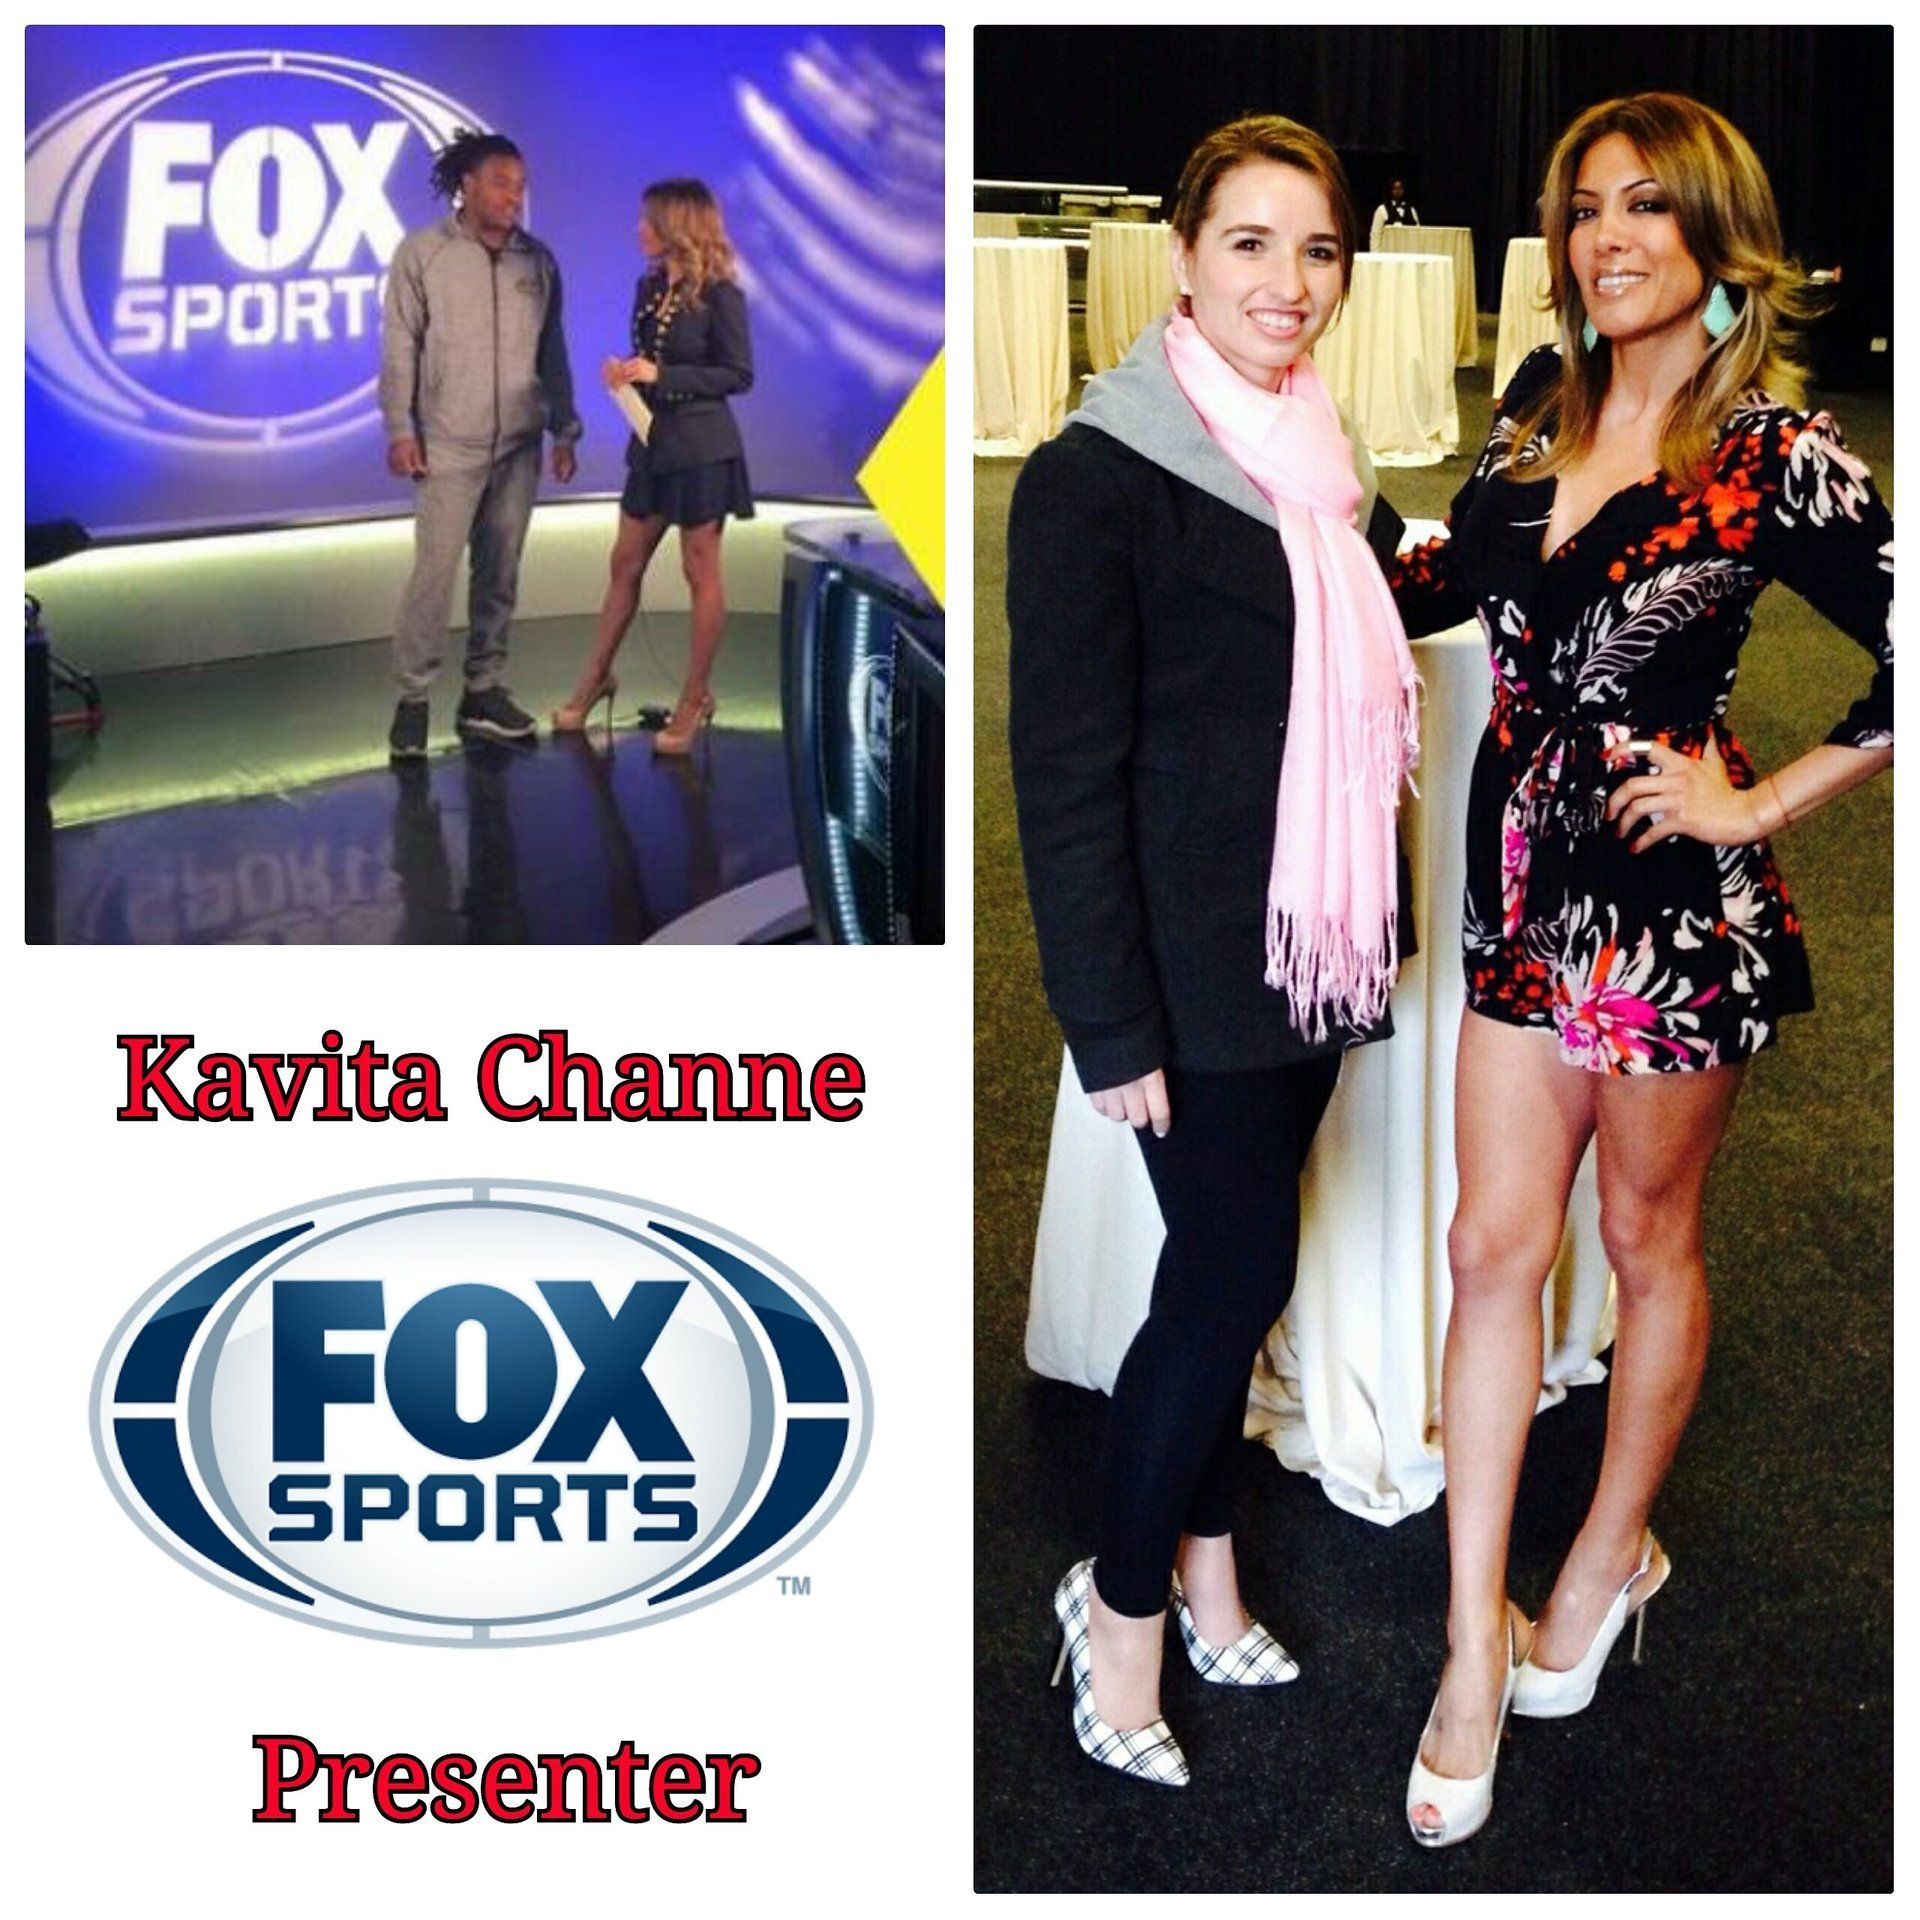 Fox Sports Presenter and Marisa da Silva Speaker